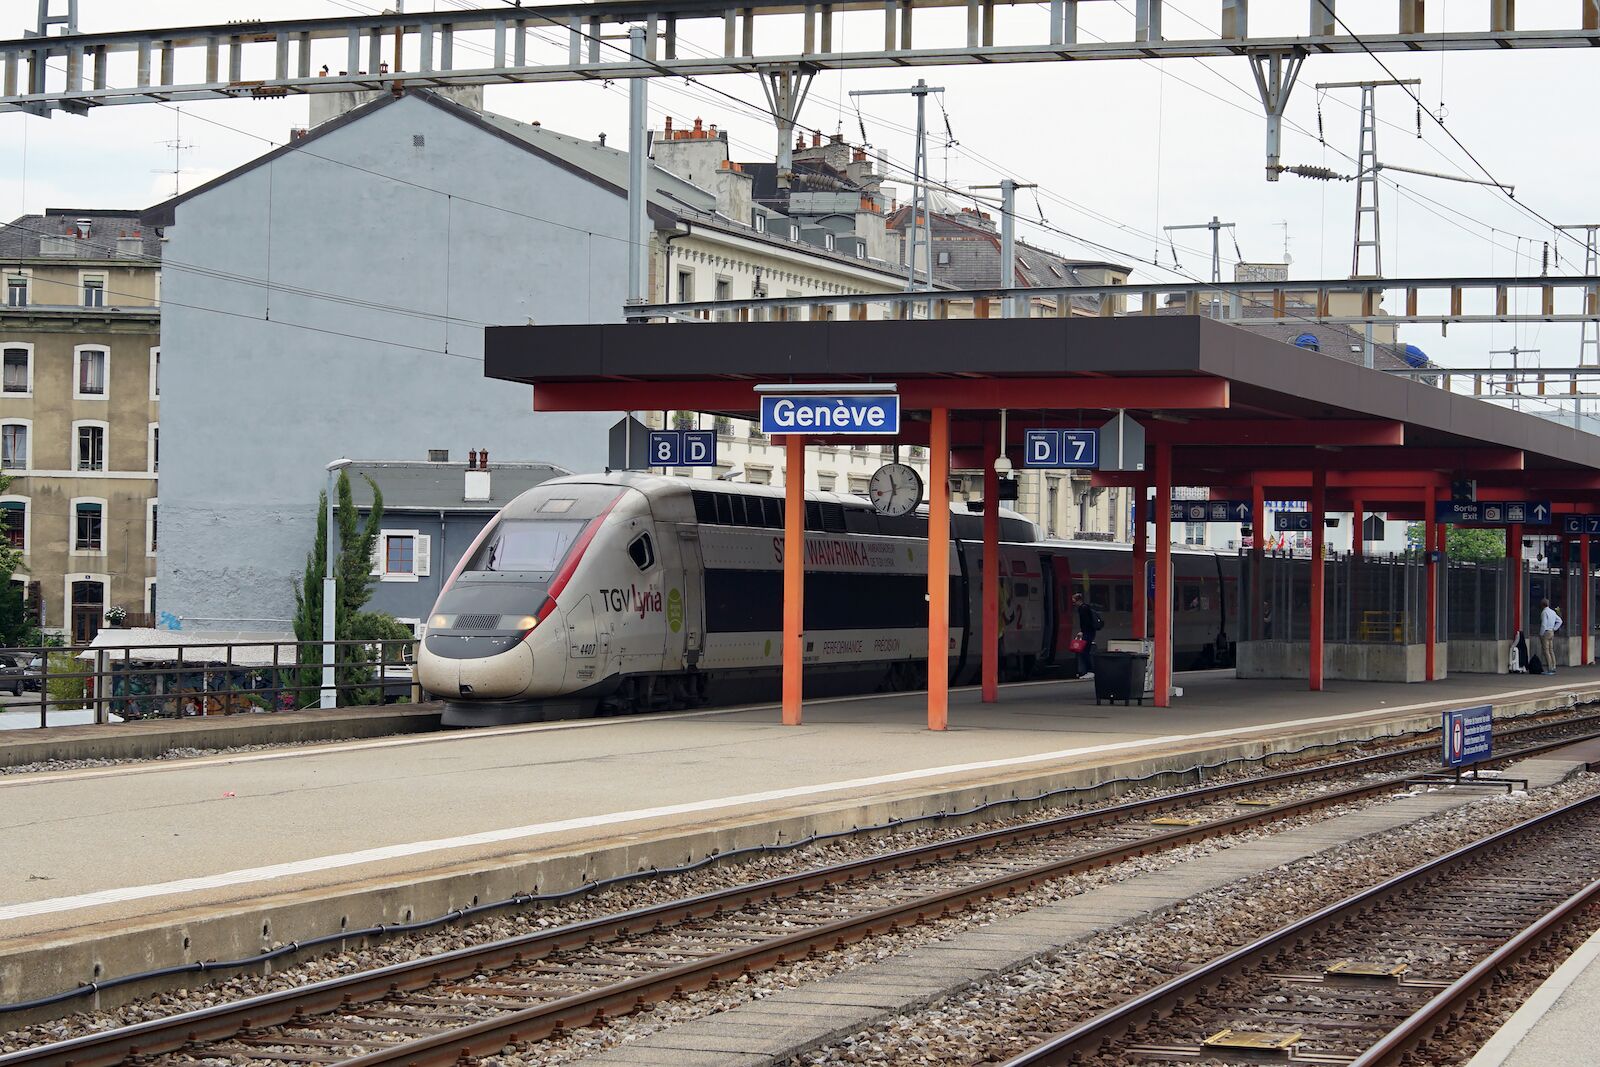 Paris to Geneva train in train station in Geneva